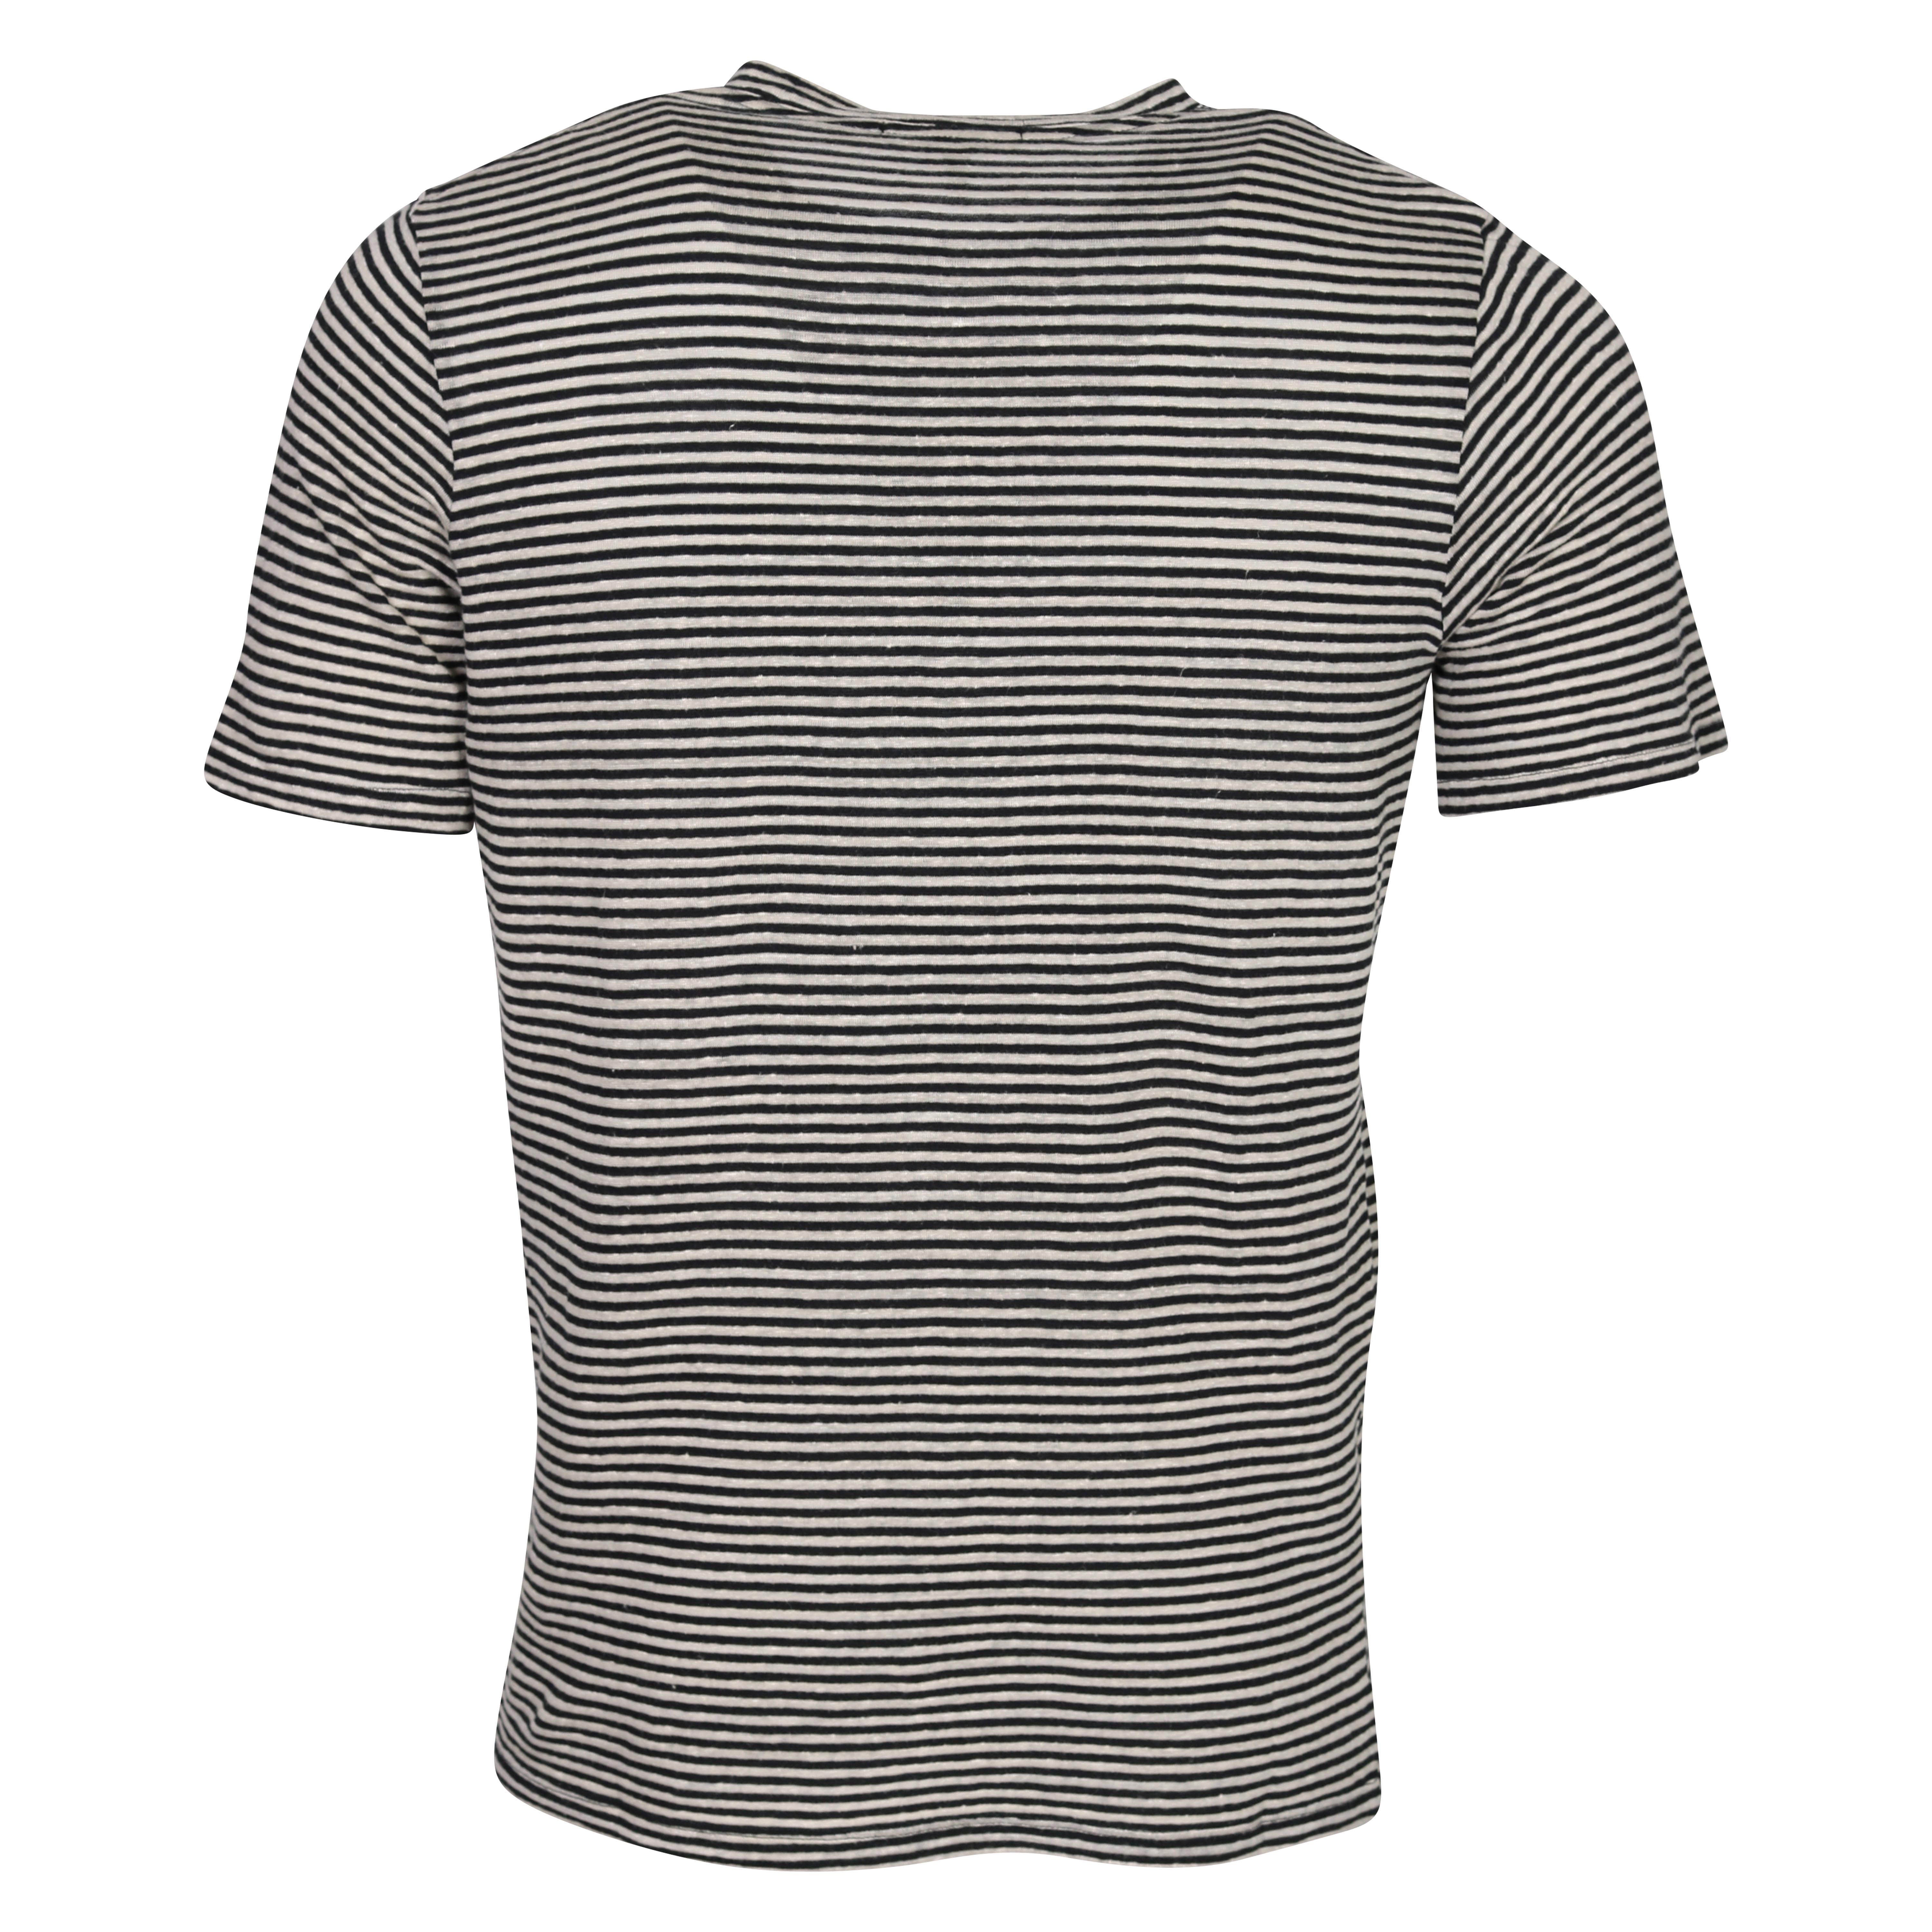 Isabel Marant Leon T-Shirt in Ecru Stripe